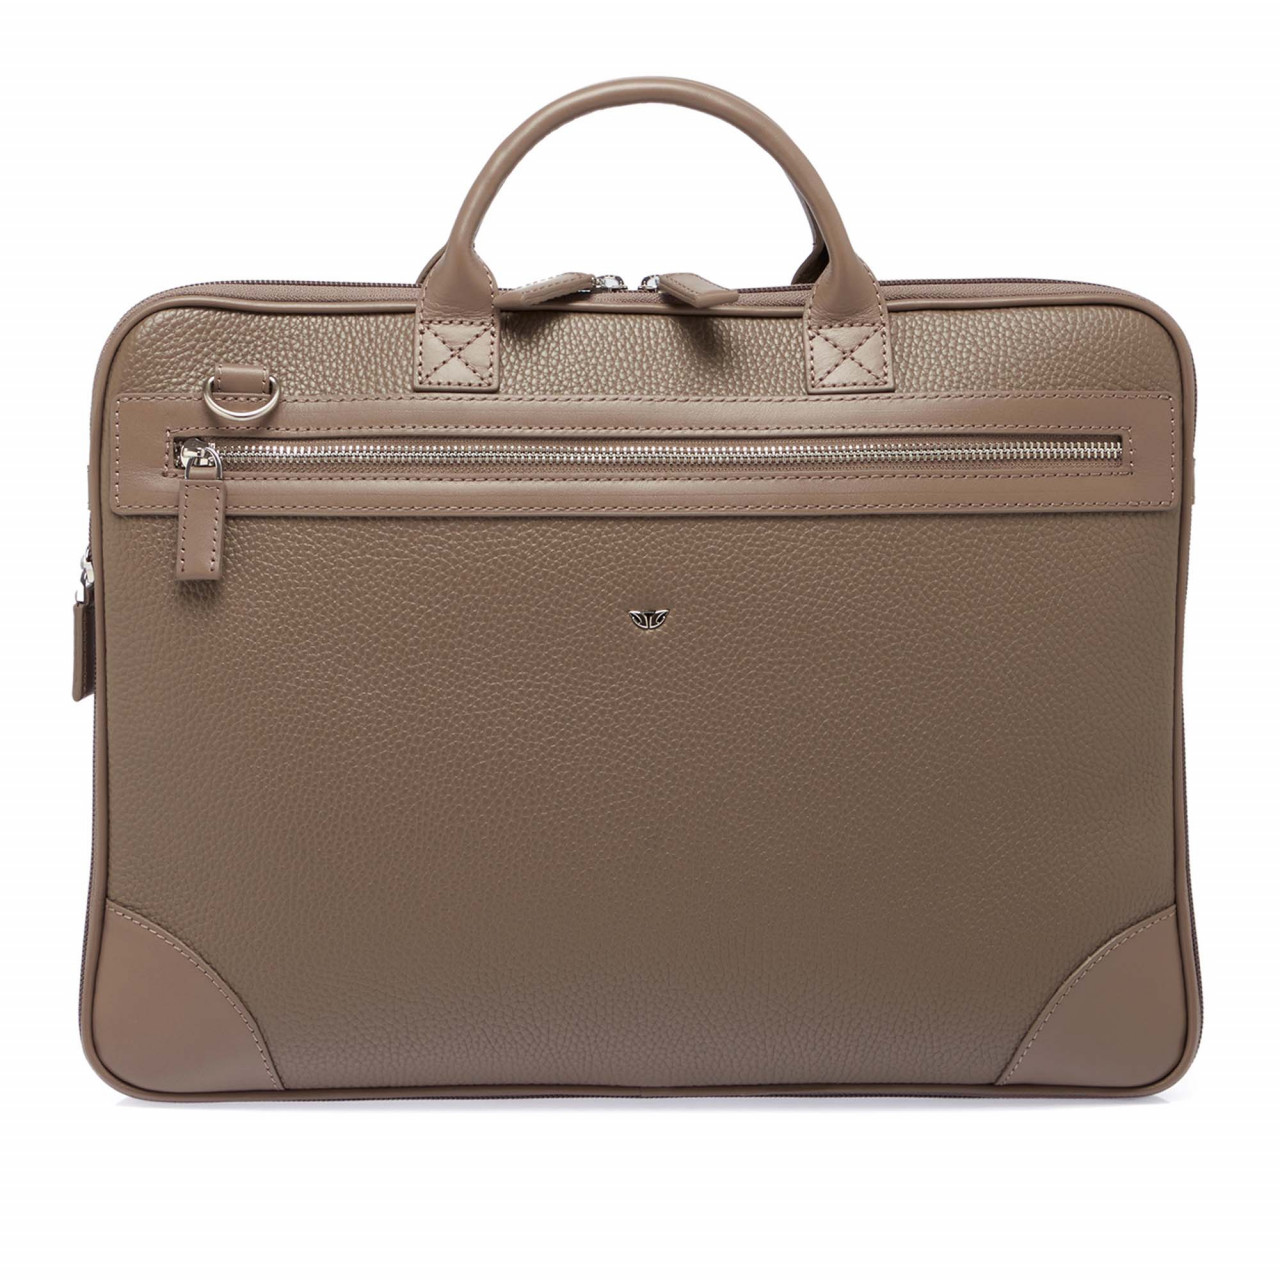 Tergan leather briefcase